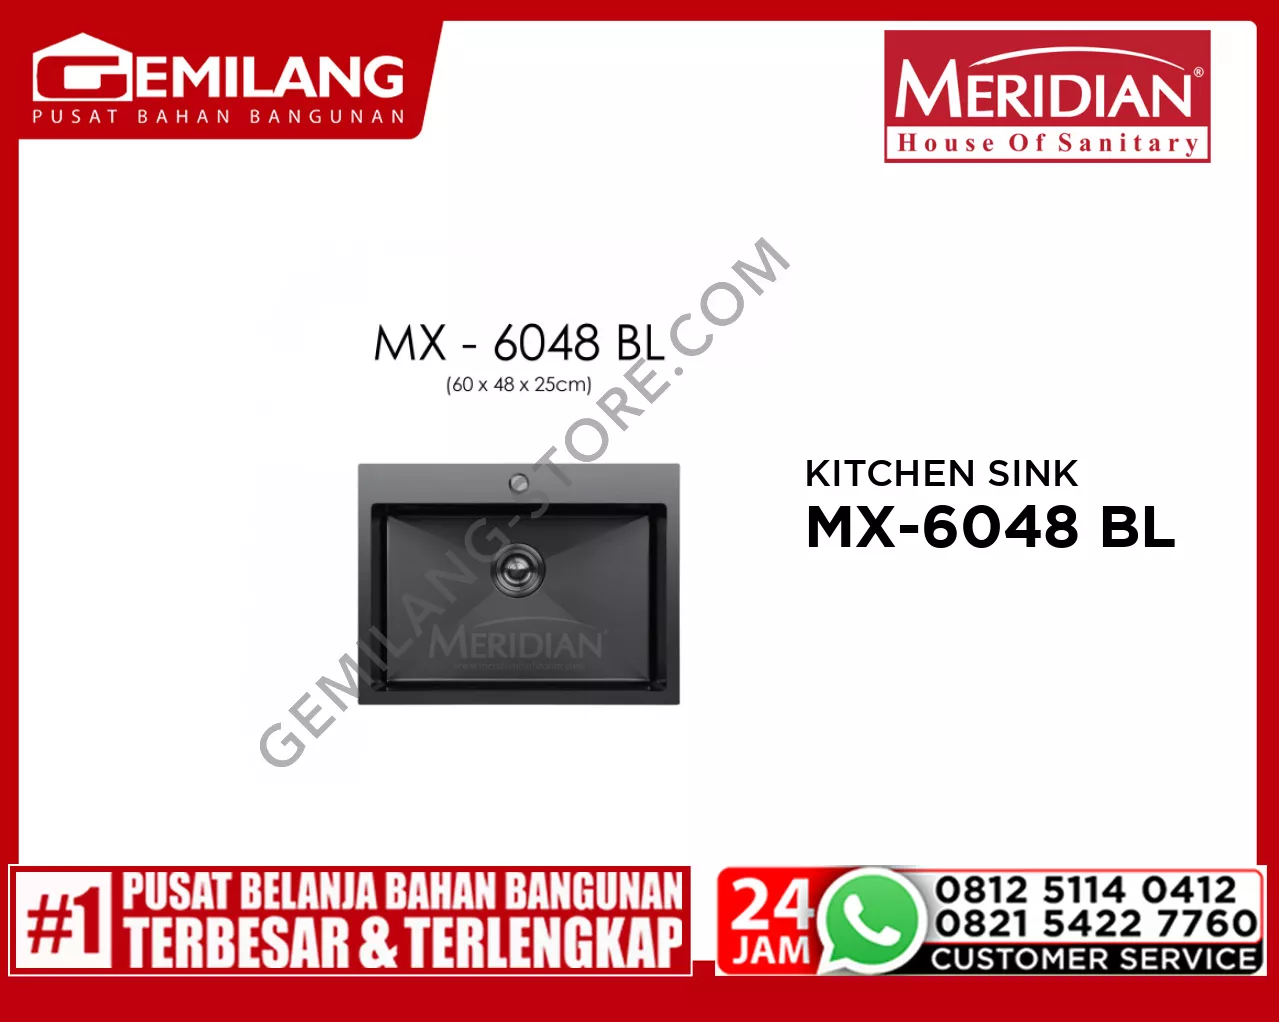 MERIDIAN KITCHEN SINK MX-6048 BLACK